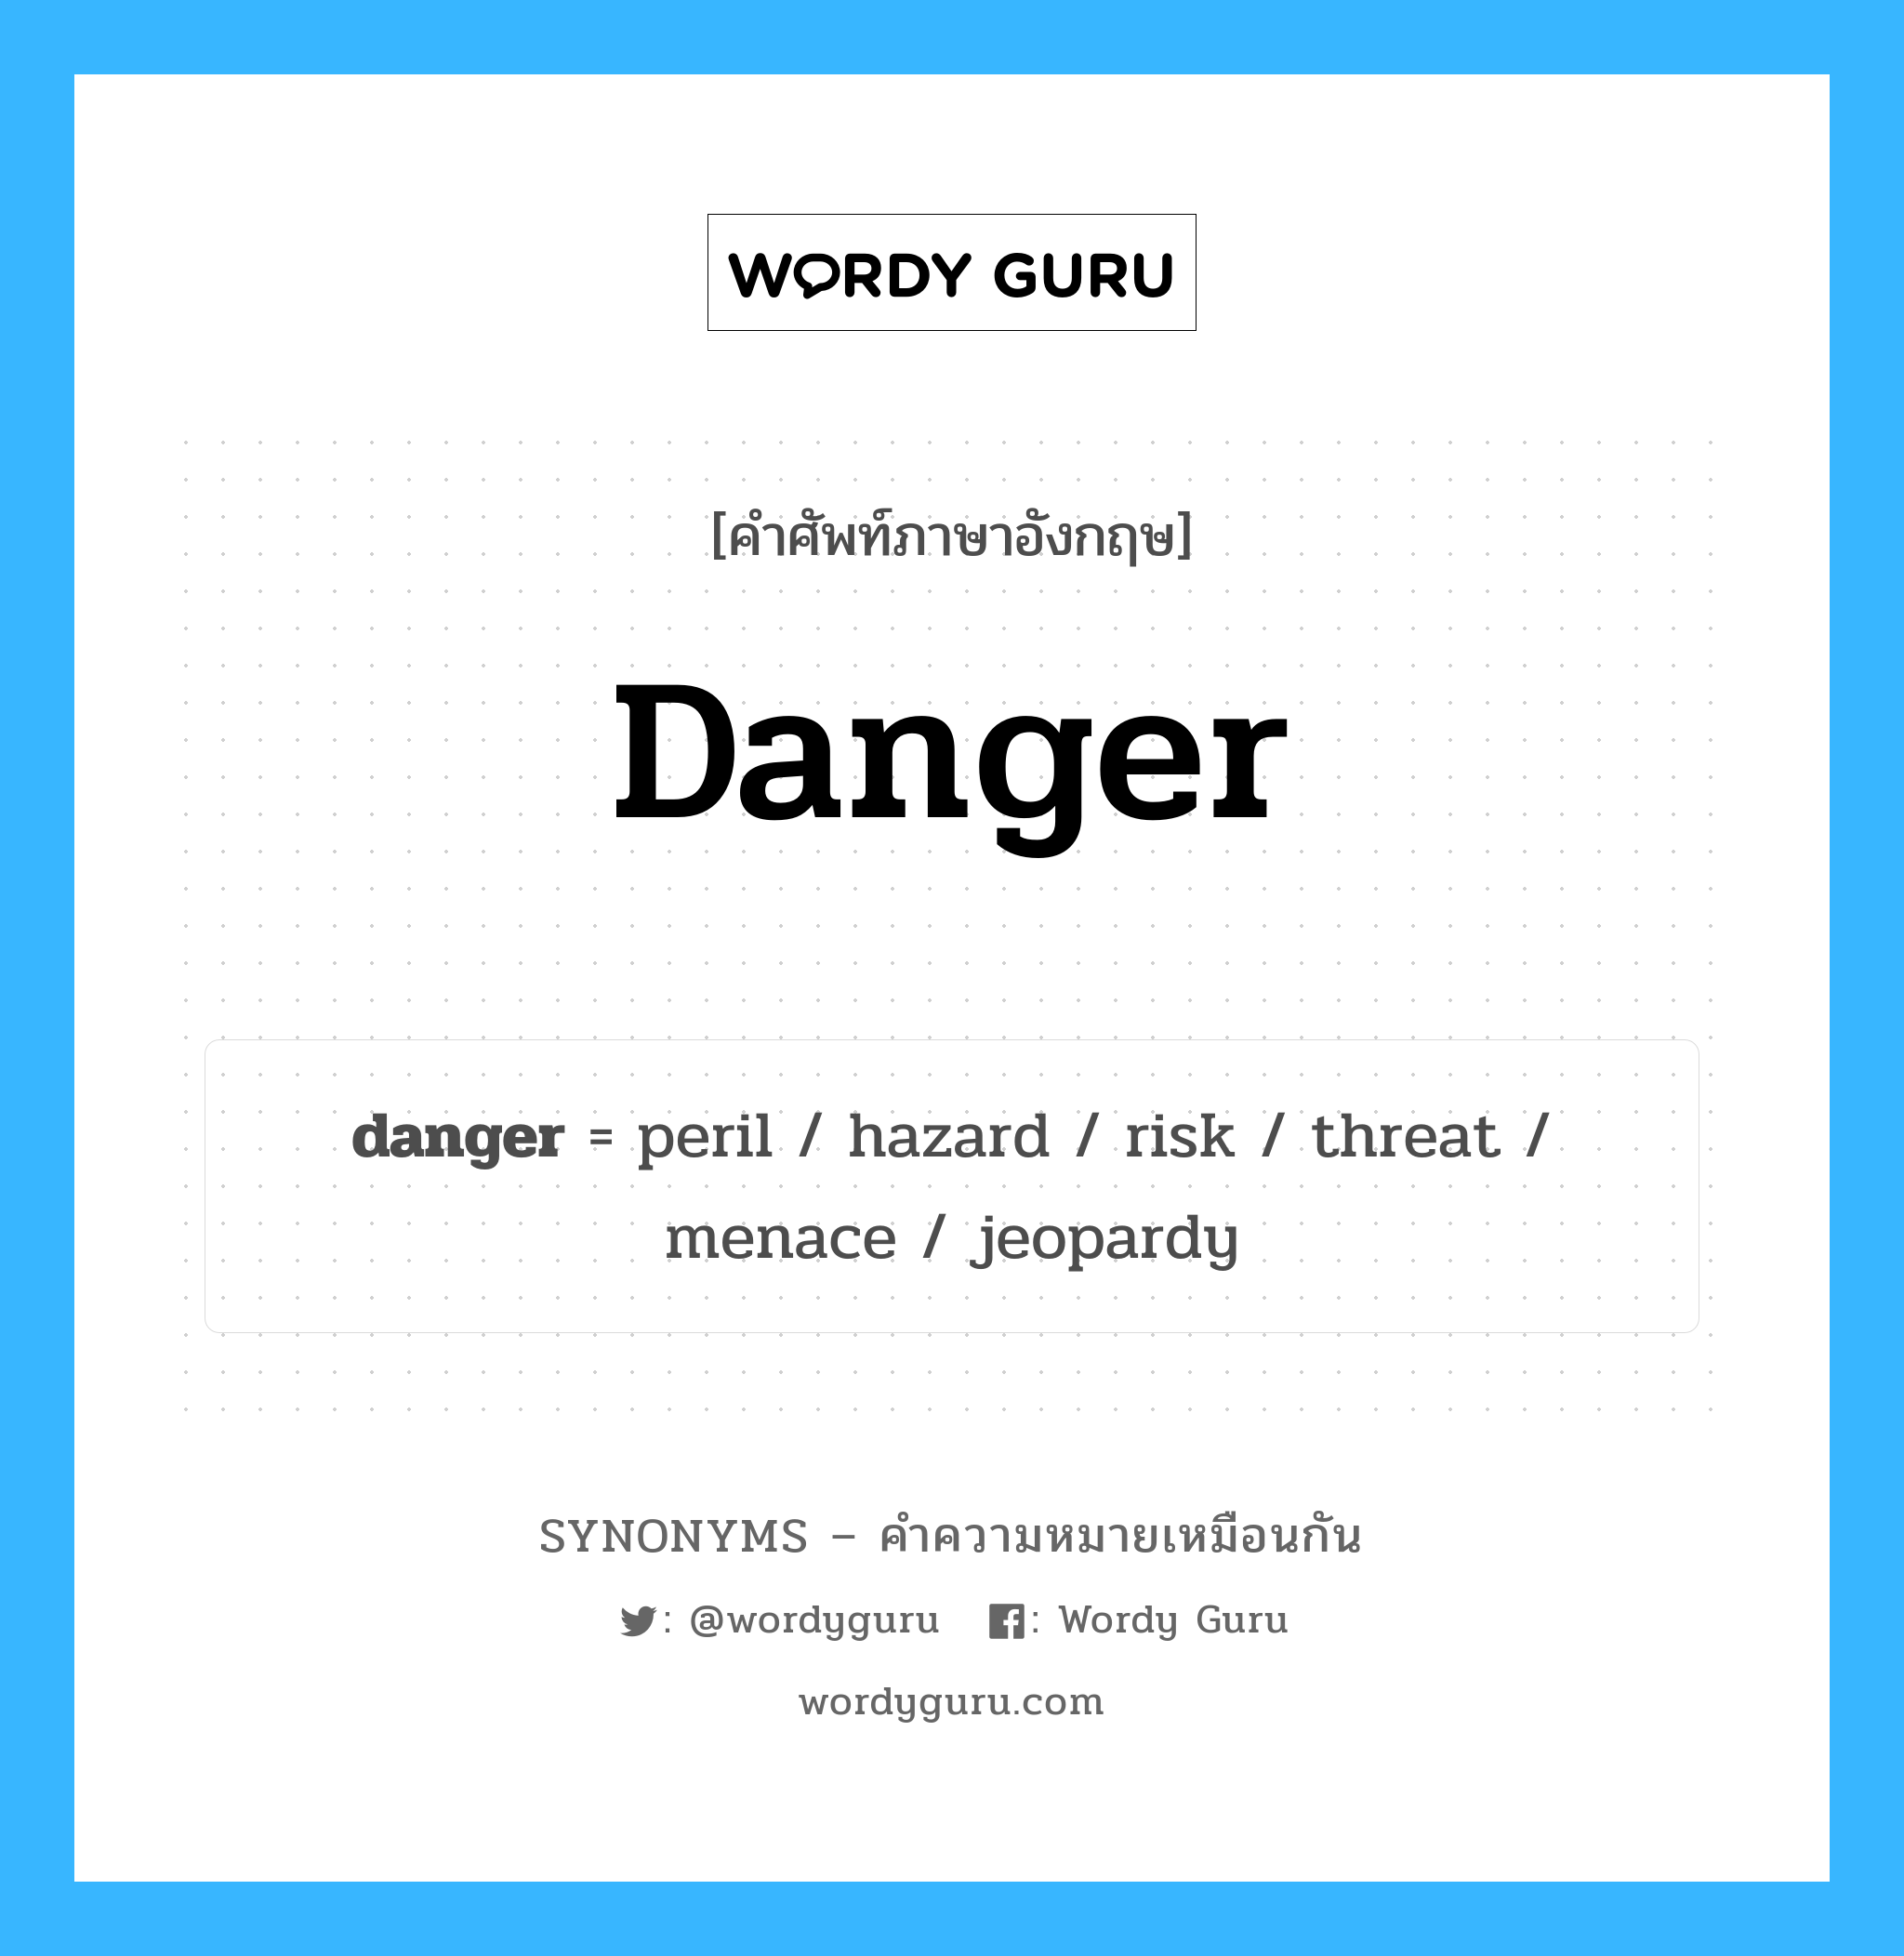 threat เป็นหนึ่งใน danger และมีคำอื่น ๆ อีกดังนี้, คำศัพท์ภาษาอังกฤษ threat ความหมายคล้ายกันกับ danger แปลว่า คุกคาม หมวด danger